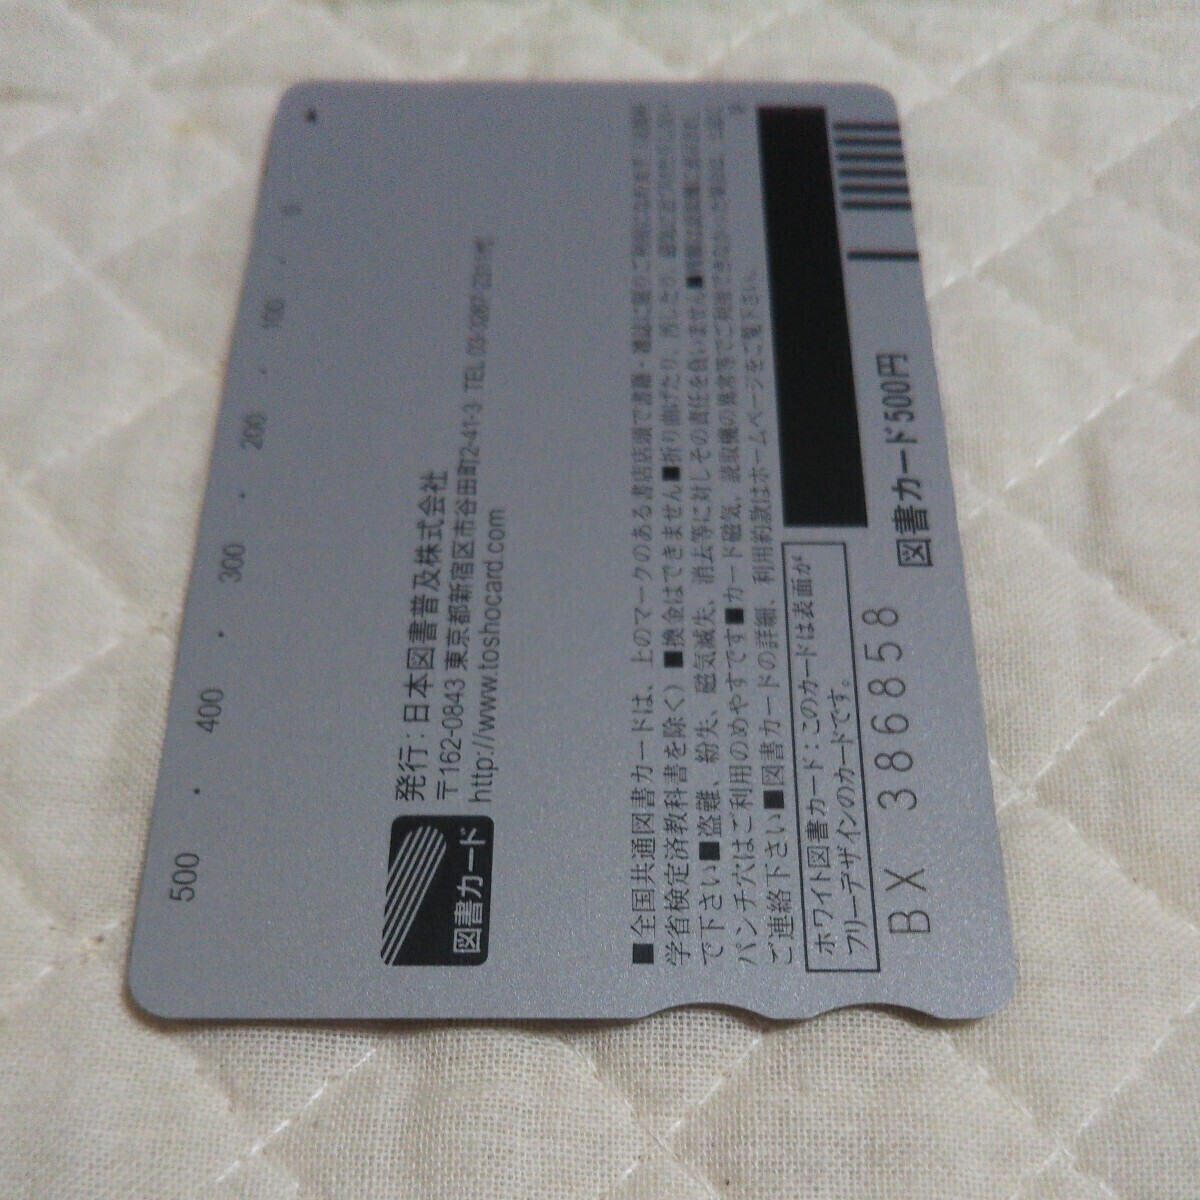 Gundam図書カード◆ 機動戦士ガンダムSEED 図書カード 500円 台紙付 ◆中古品◆未使用◆1枚 _画像5